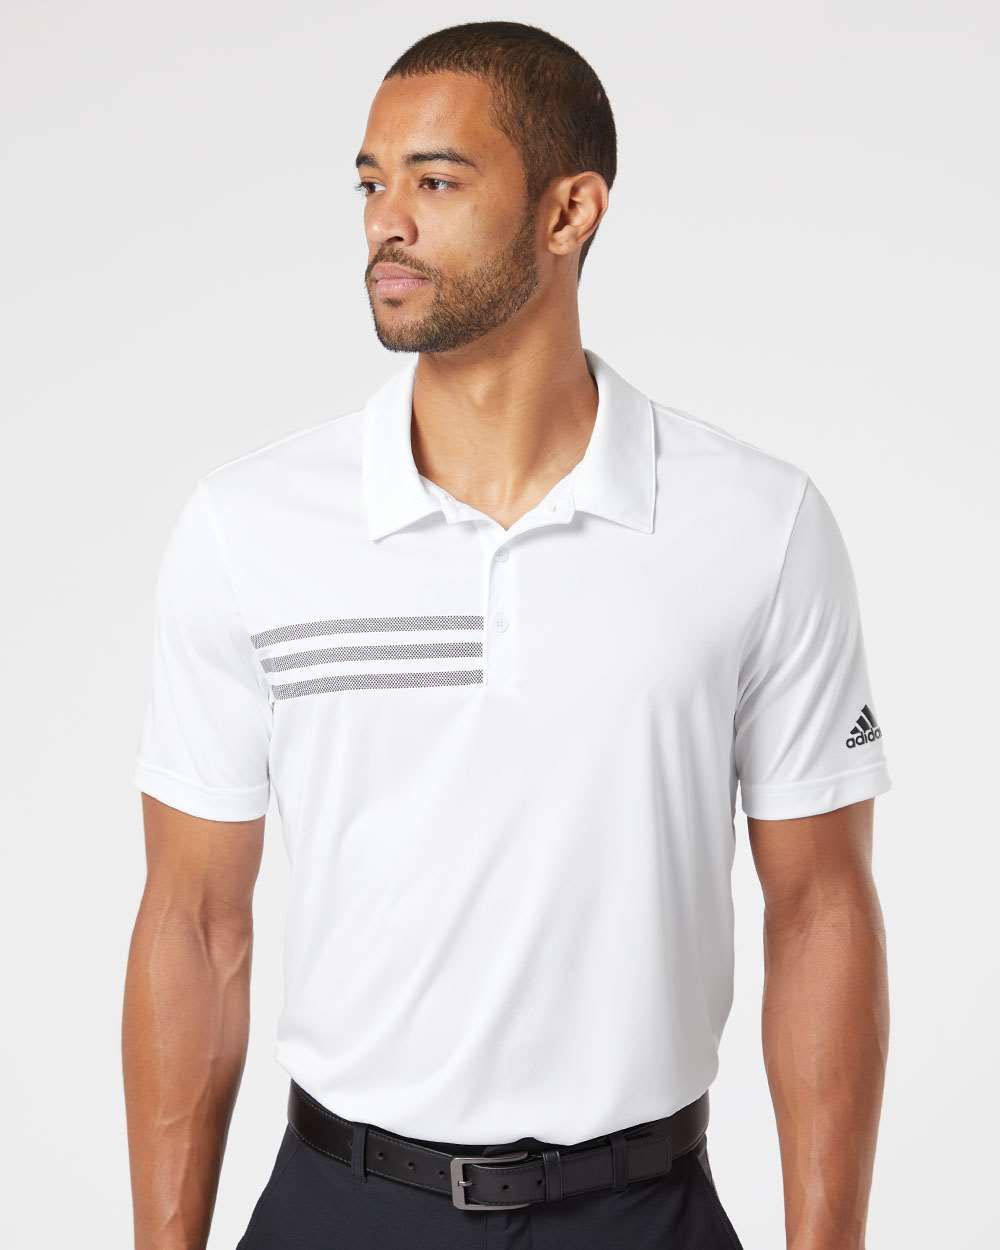 Adidas  A324 3-Stripes Chest Polo Men's T-Shirt #colormdl_White/ Black